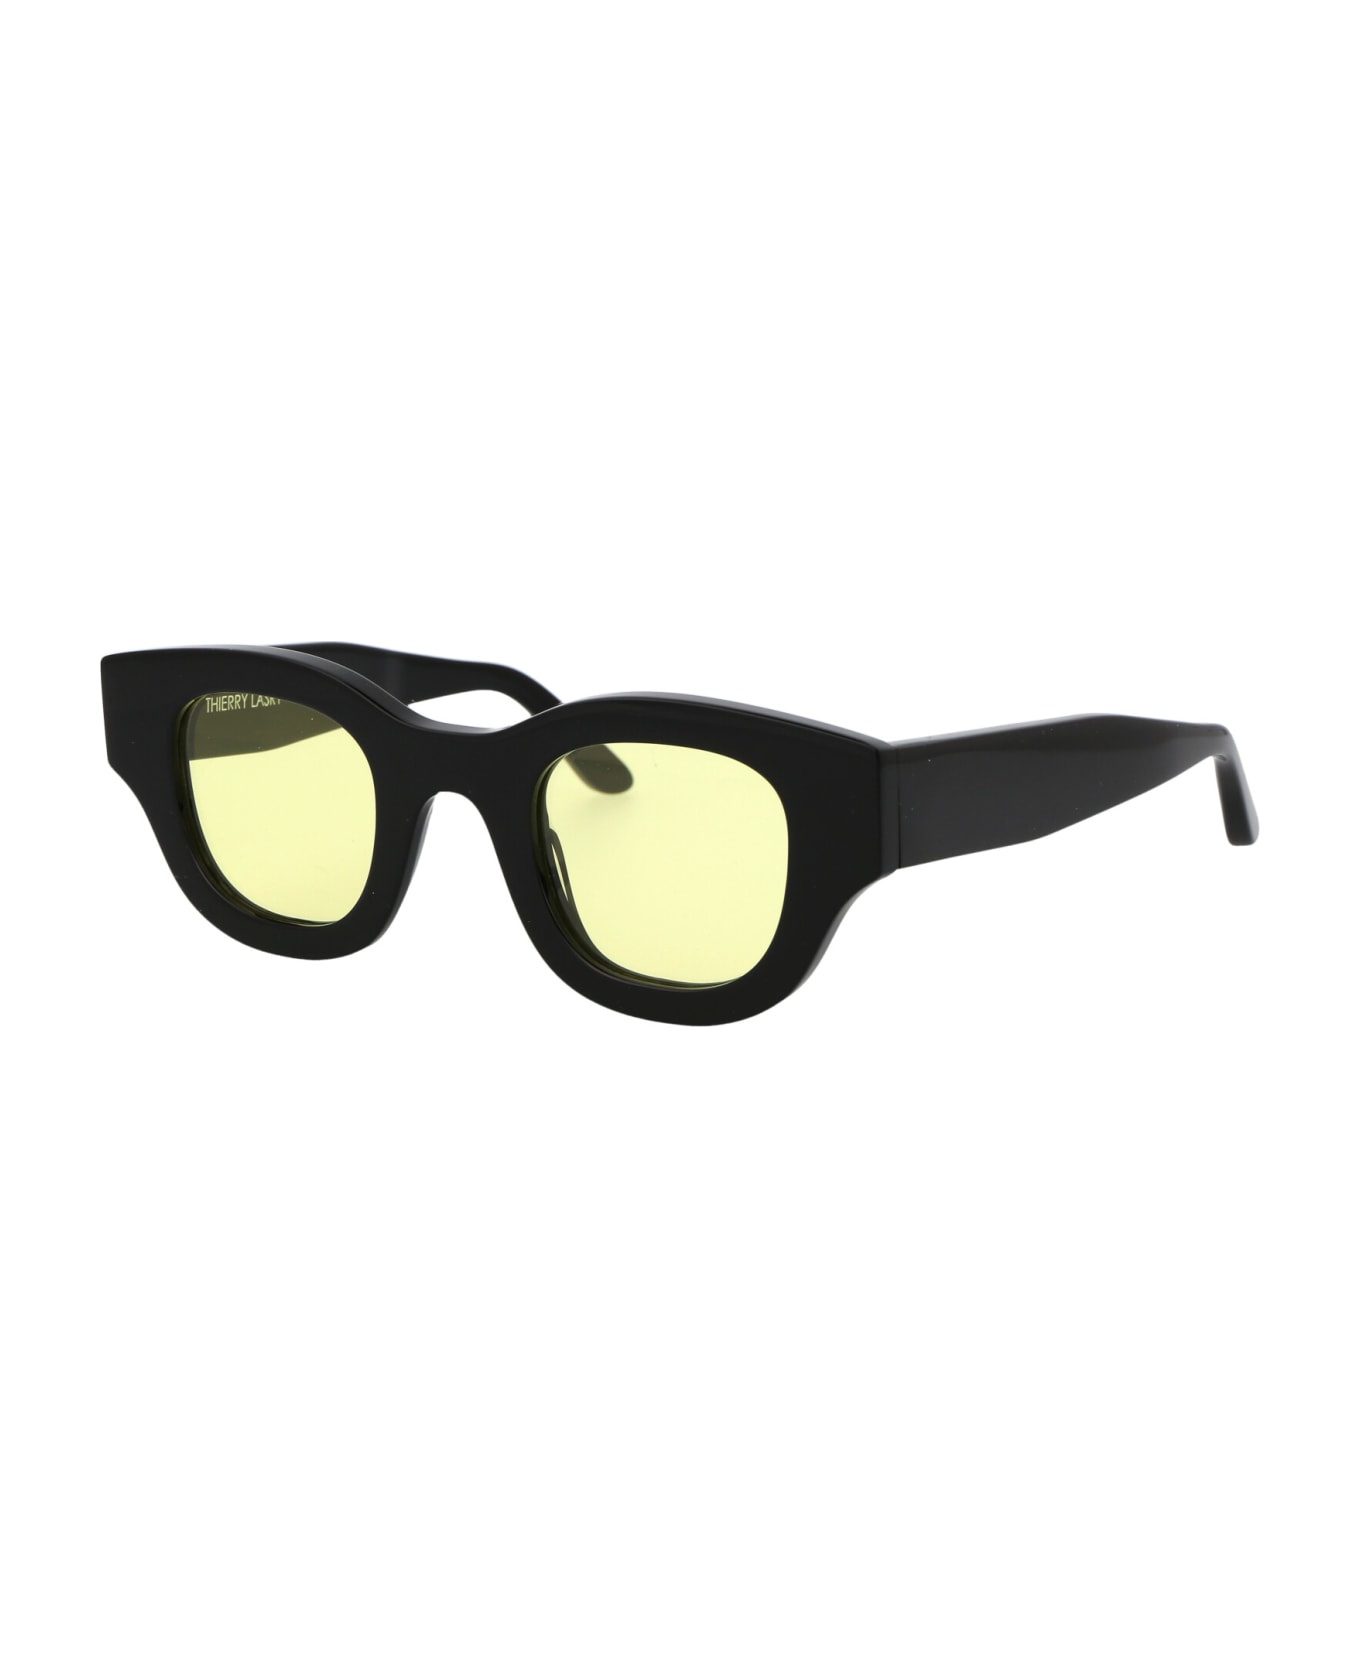 Thierry Lasry Autocracy Sunglasses - 101 YELLOW サングラス